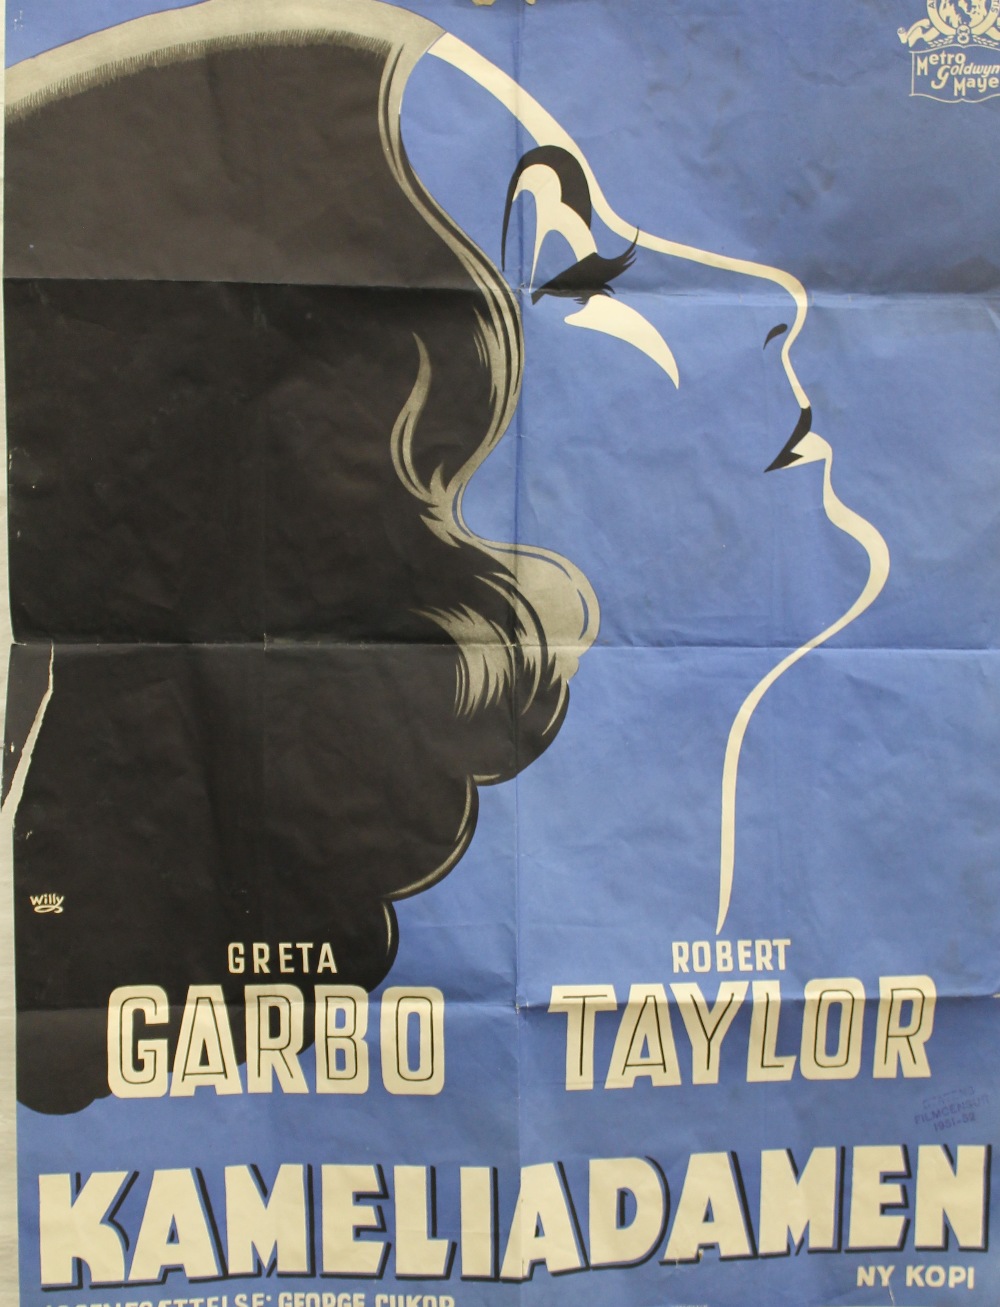 A 1950s Danish film poster, entitled Kameliadamen, starring Greta Garbo and Robert Taylor. 61.